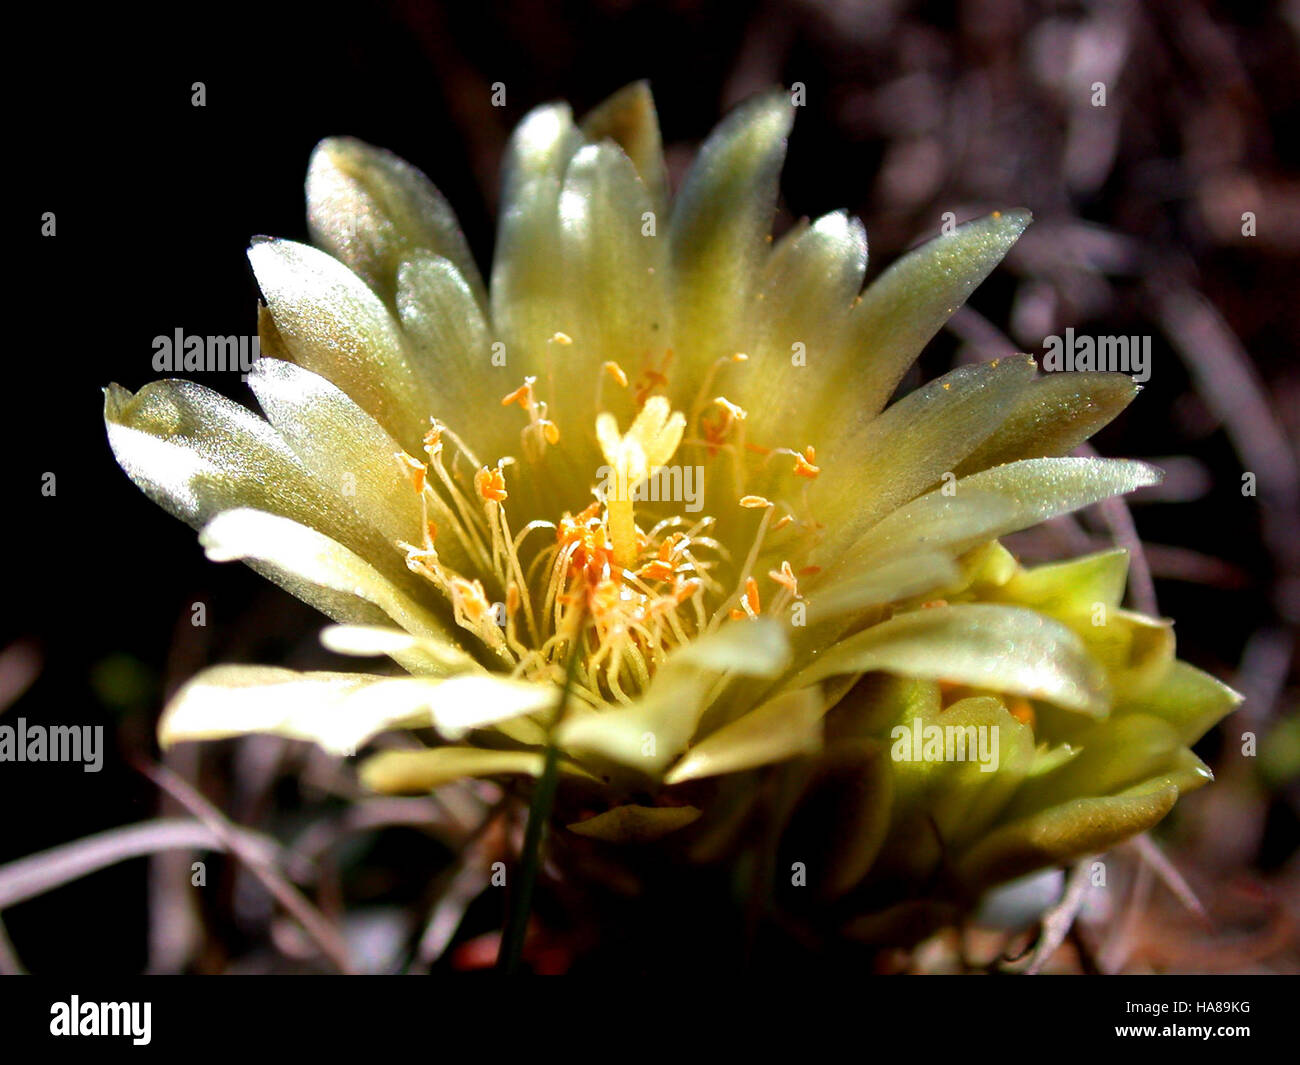 usfwsendsp 5863730573 Endangered Tobusch fishhook cactus (Ancistrocactus tobuschii) Stock Photo